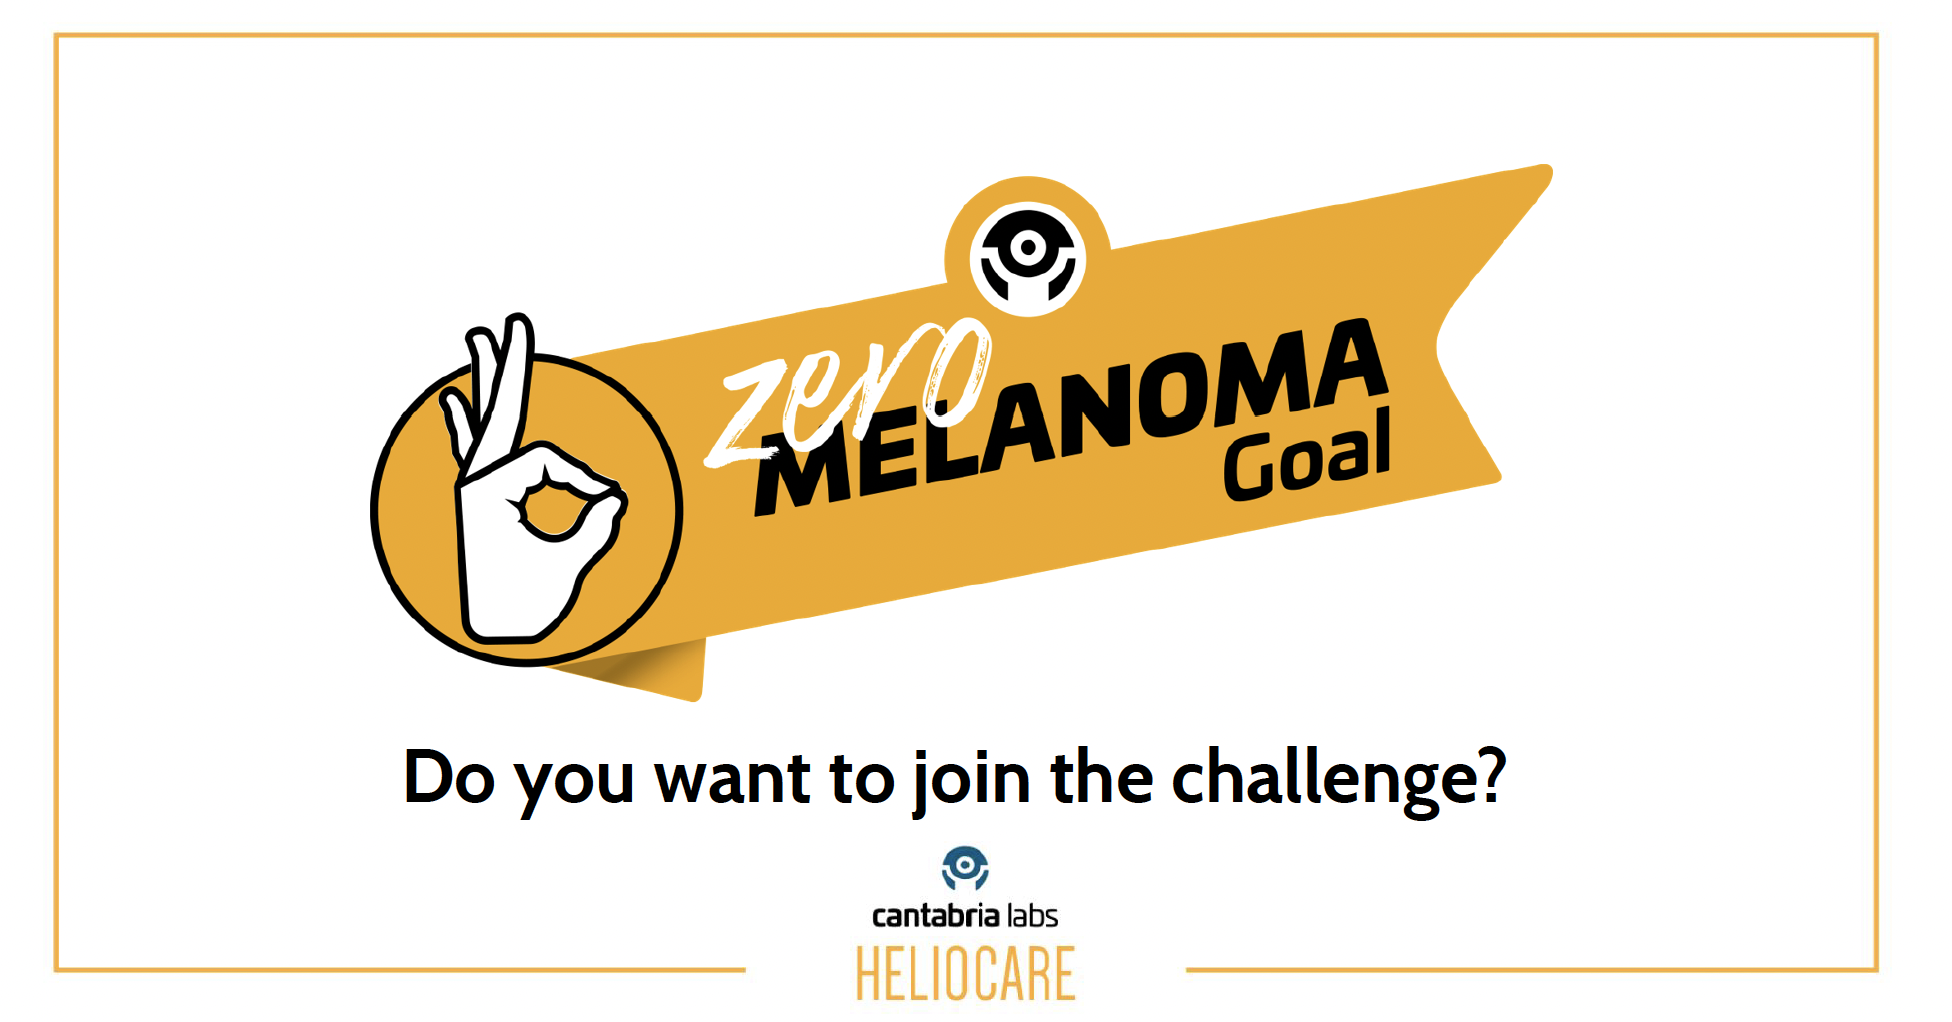 Goal Zero Melanoma